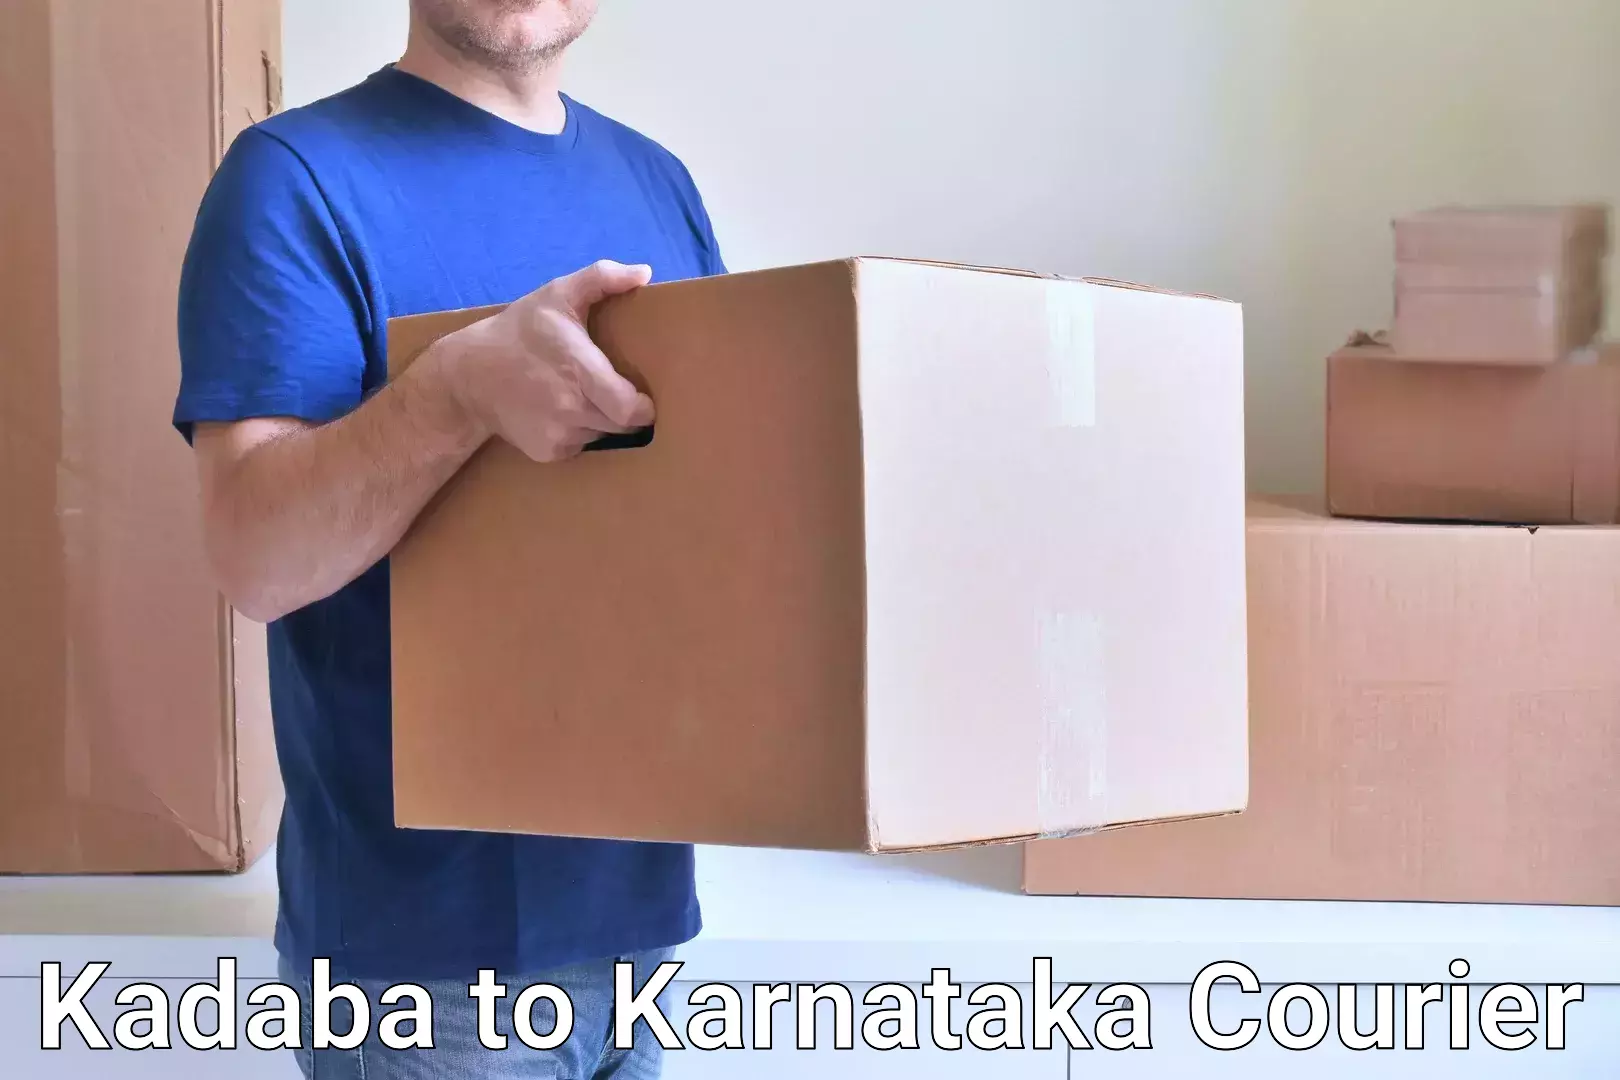 Courier service innovation Kadaba to Ittigi